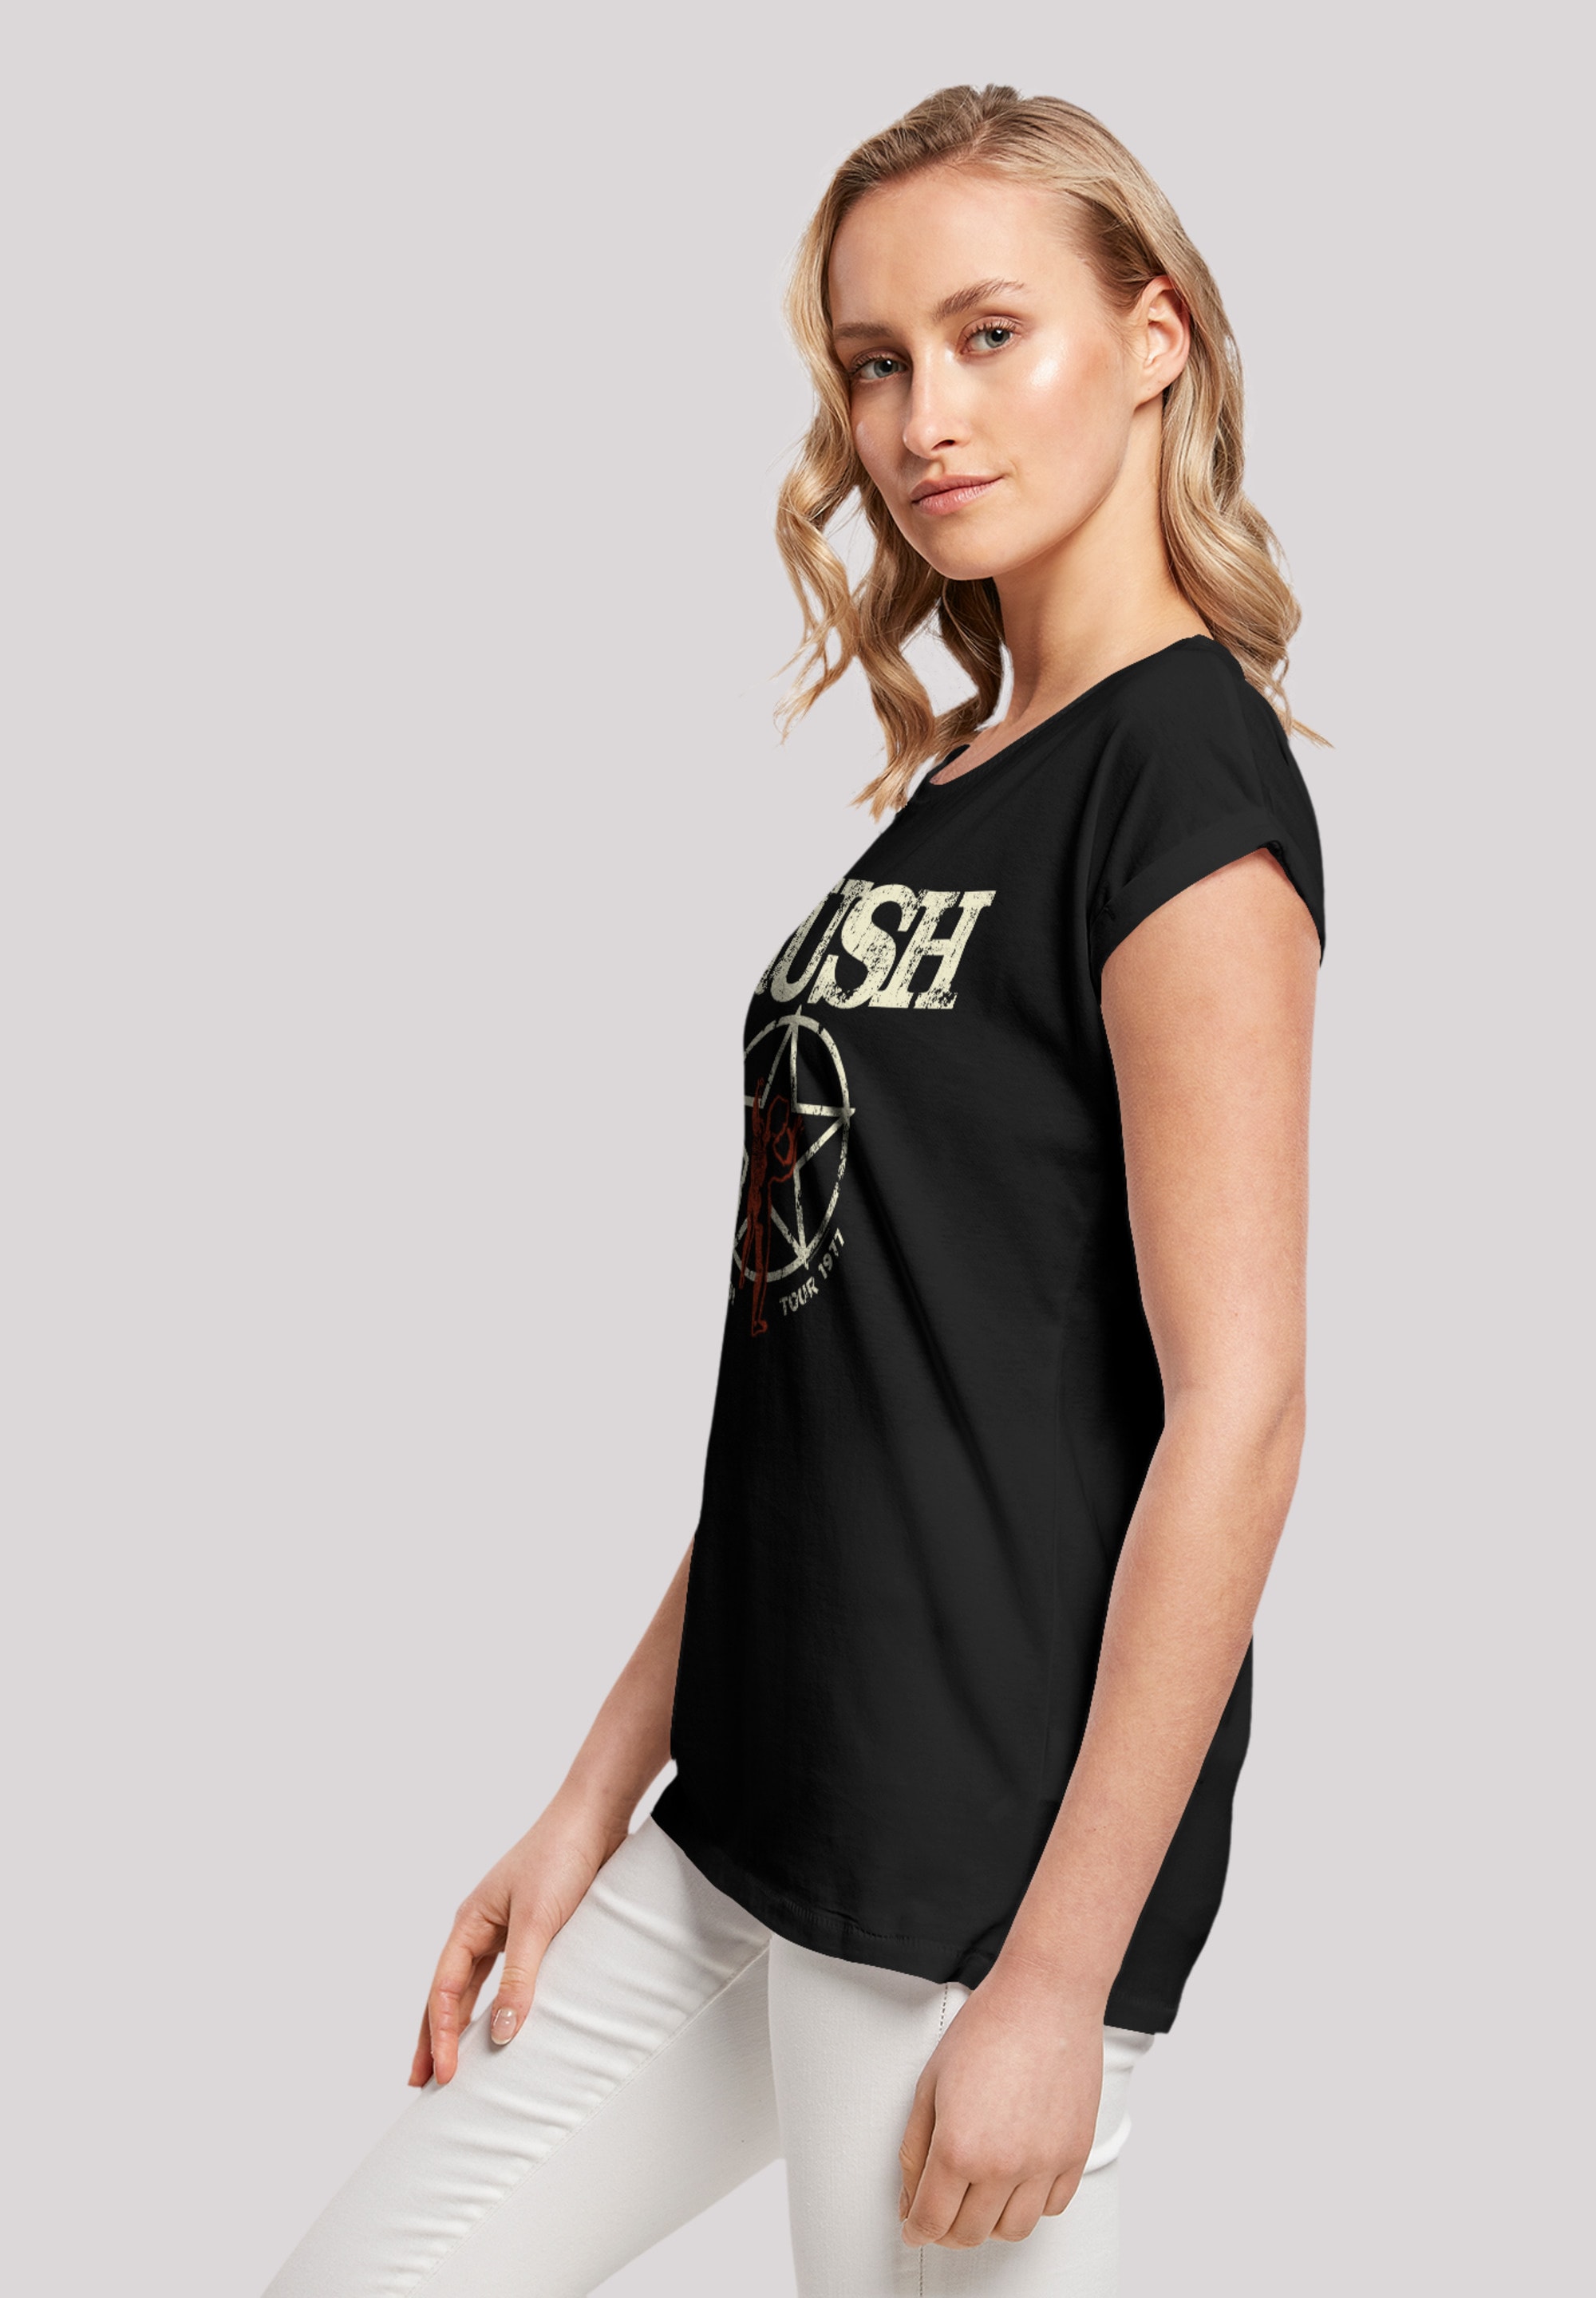 F4NT4STIC T-Shirt »Rush Rock Band American Tour 1977«, Premium Qualität  online kaufen | I'm walking